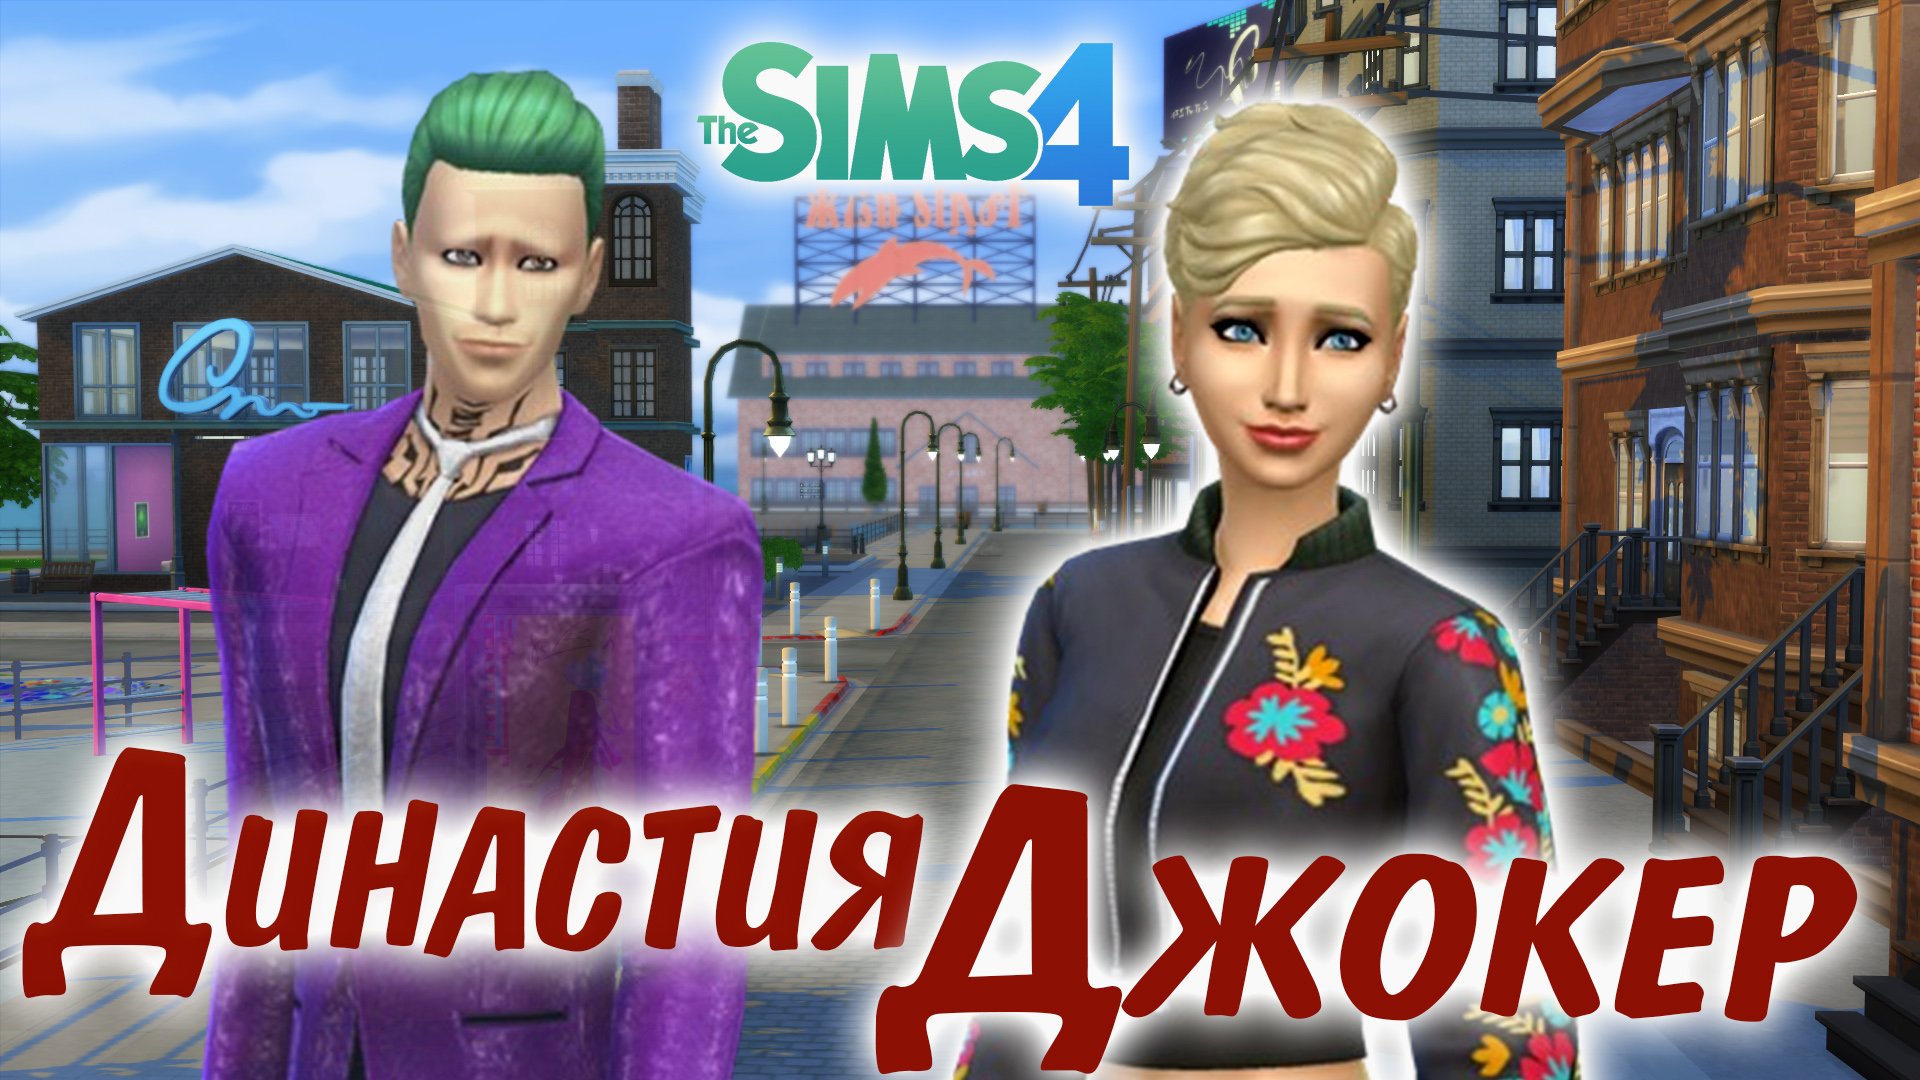 The Sims 4 Династия Джокер